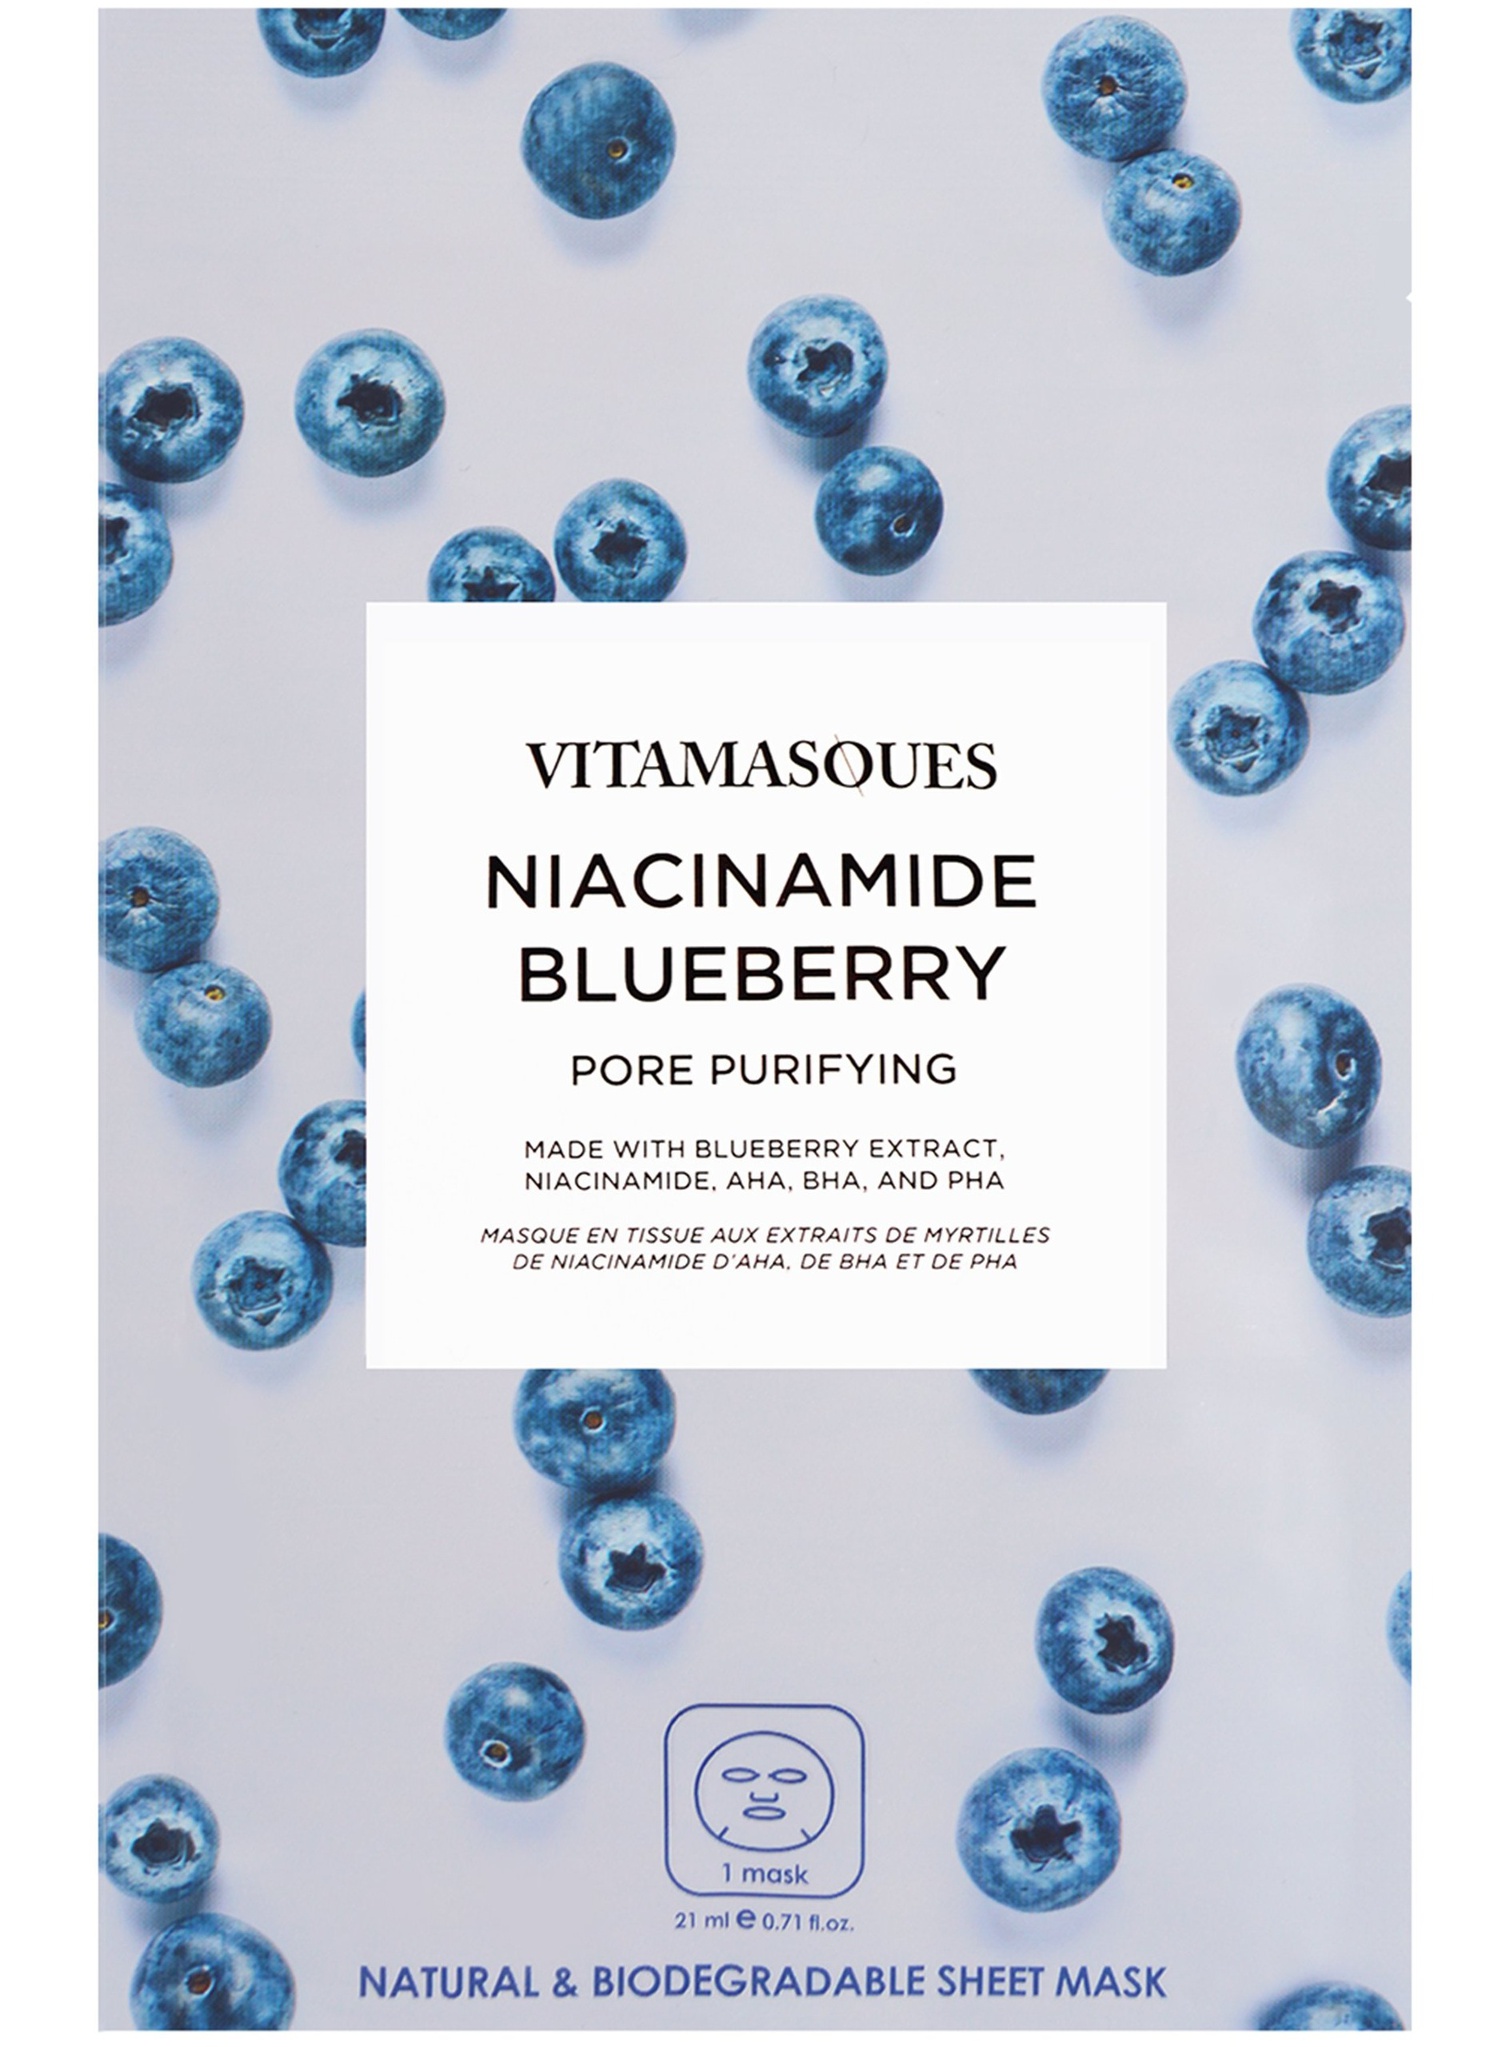 Vitamasques Niacinamide Blueberry